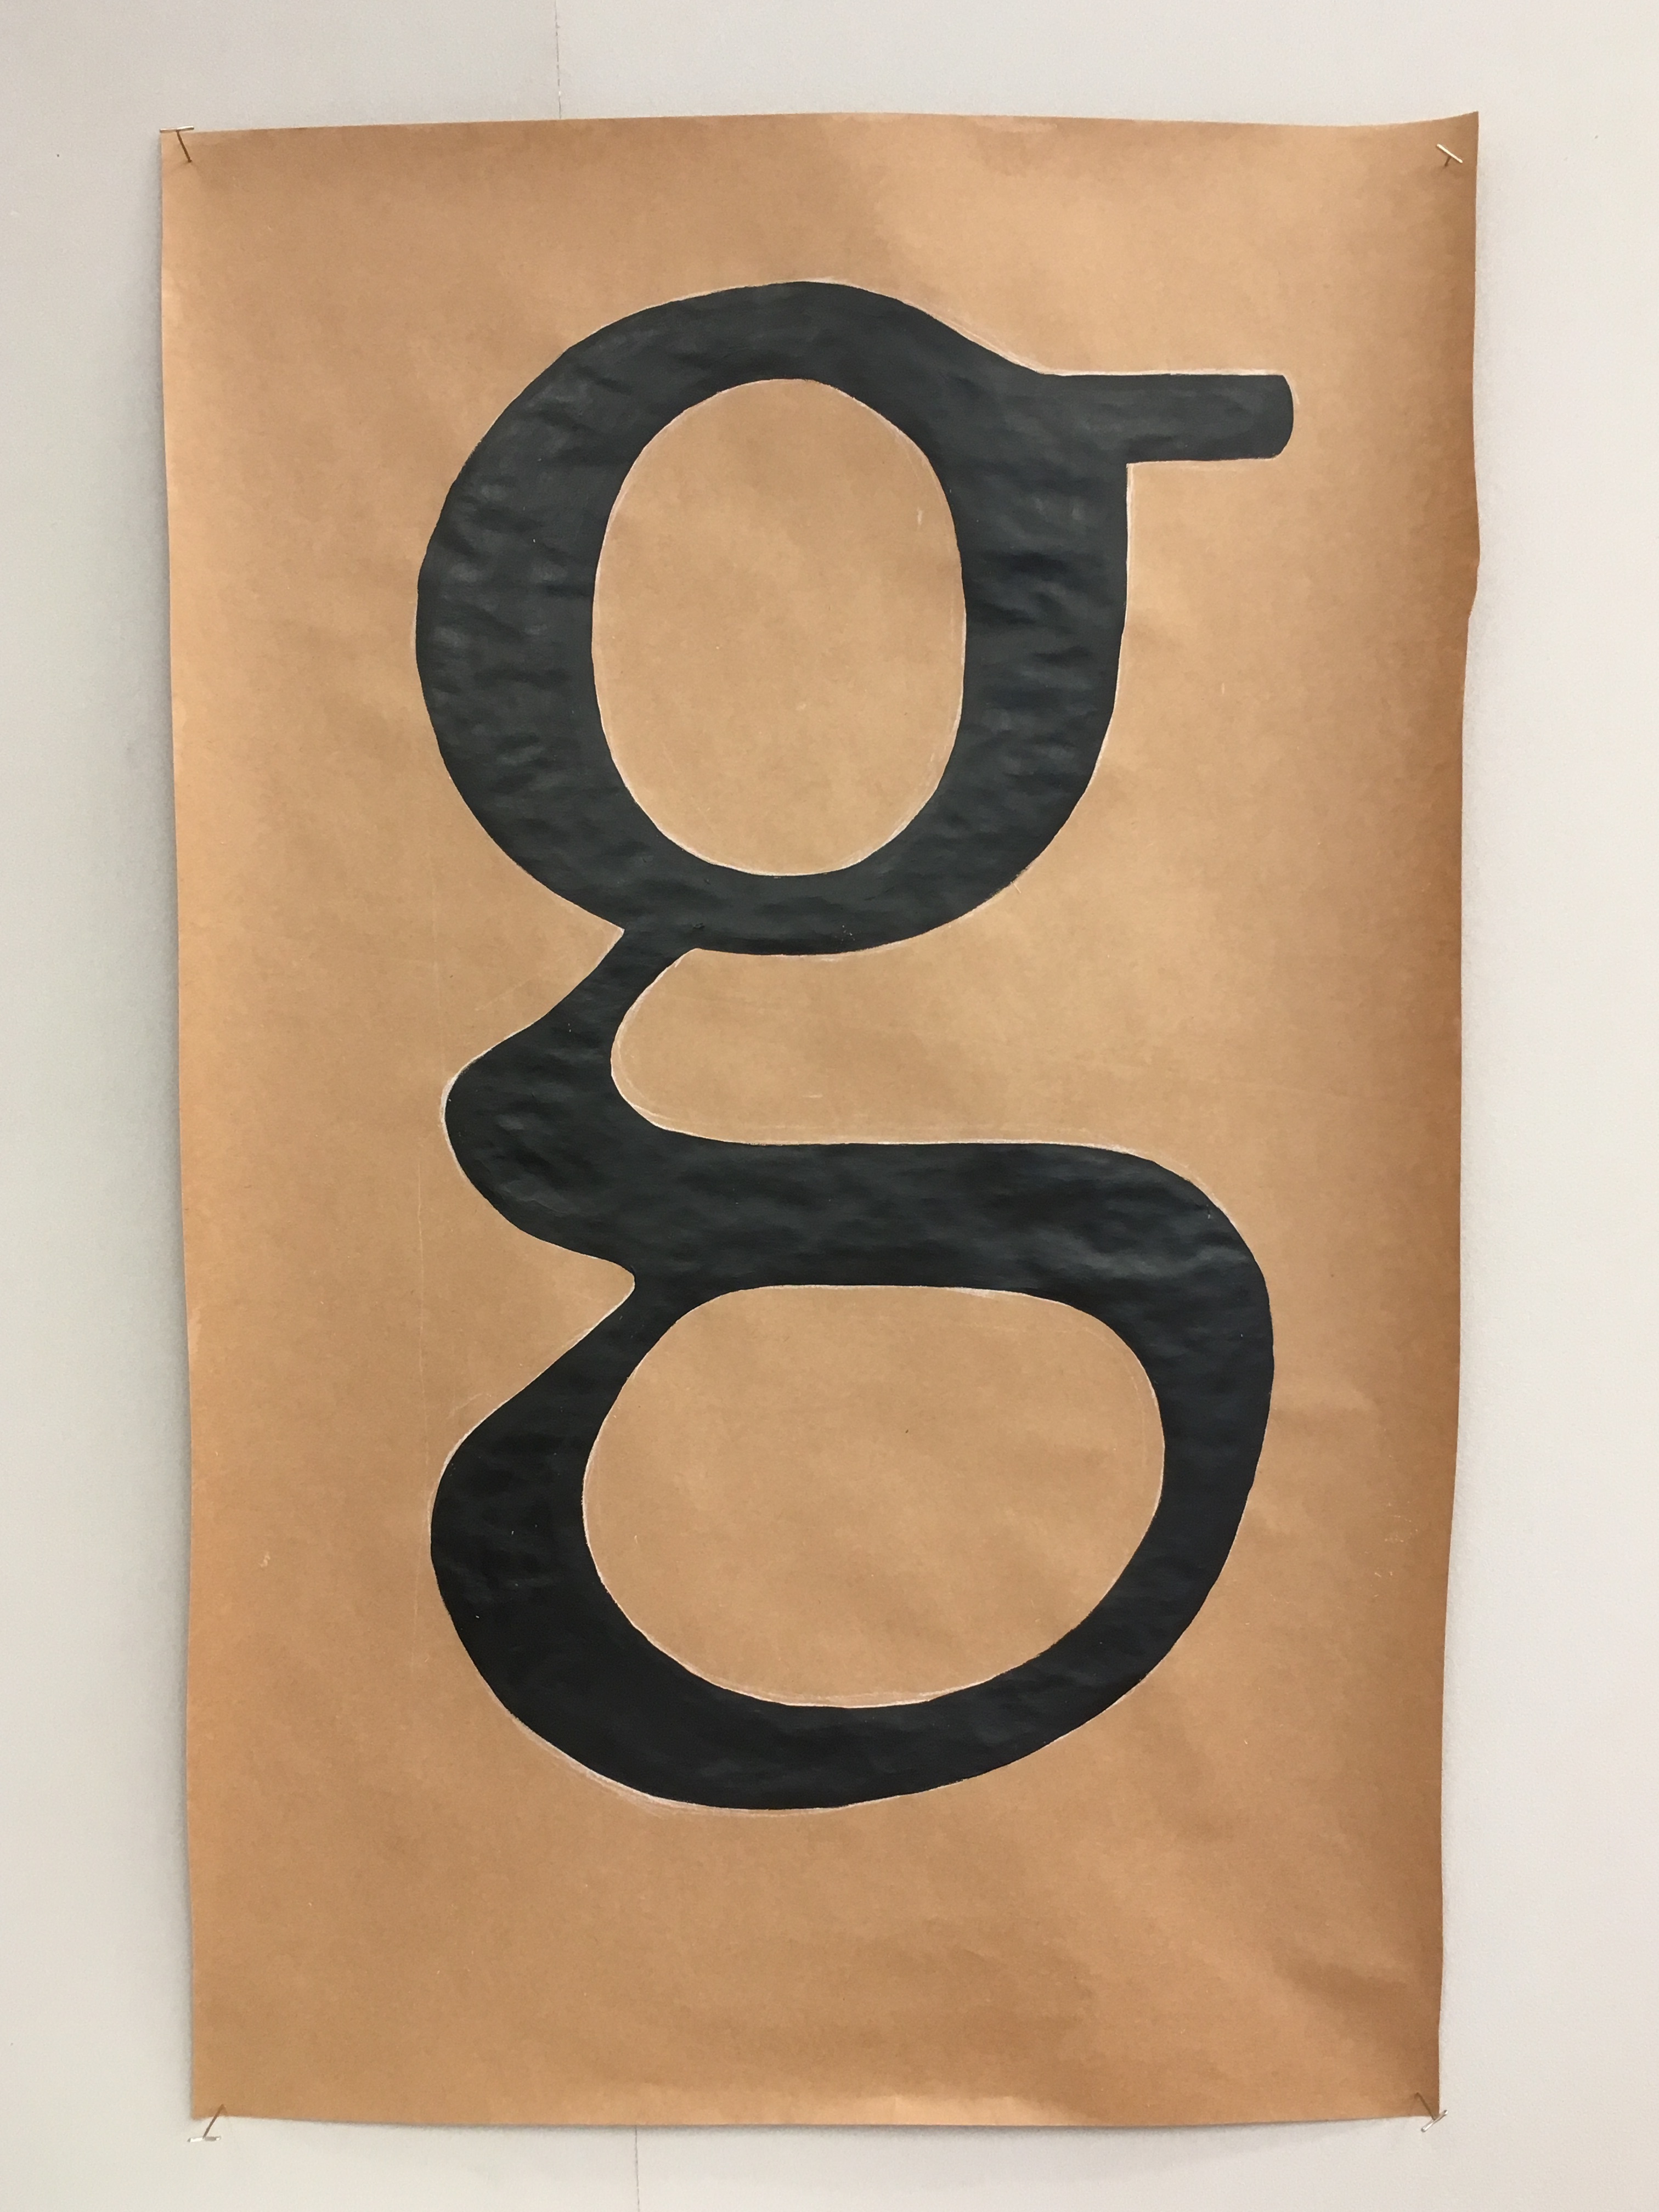 garamond g//language and letterform